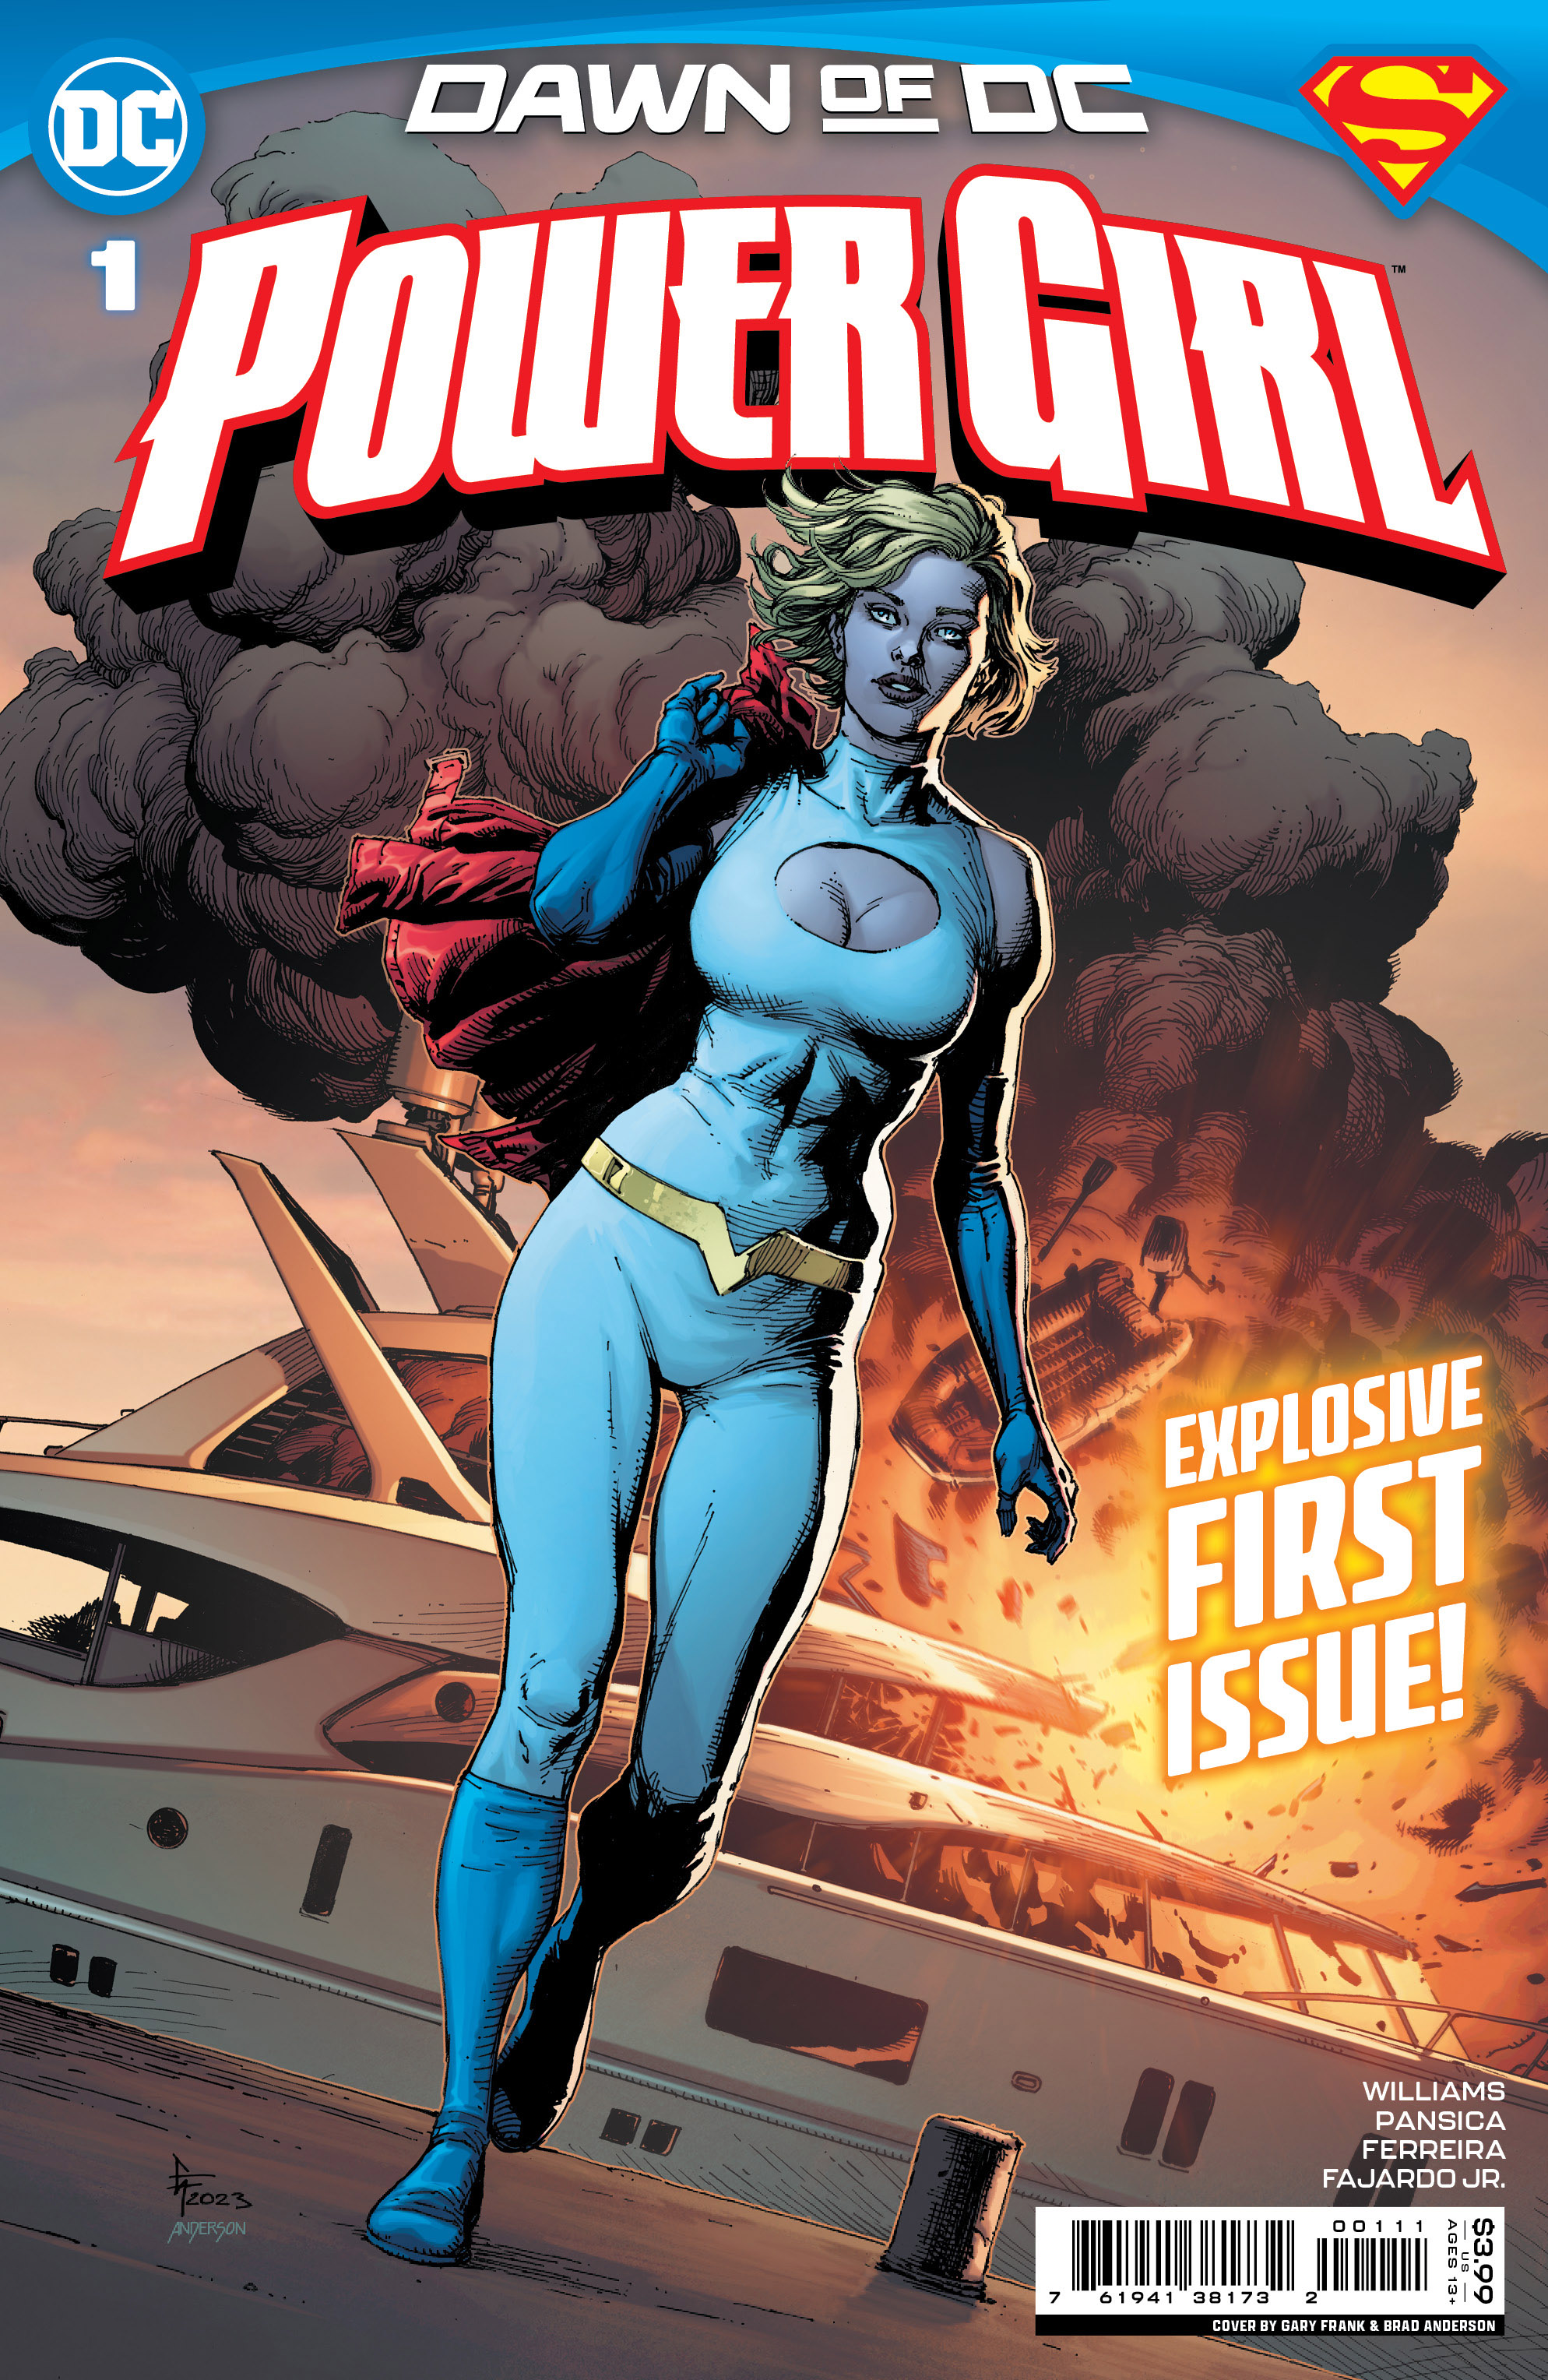 Power Girl #1 Cover A Gary Frank